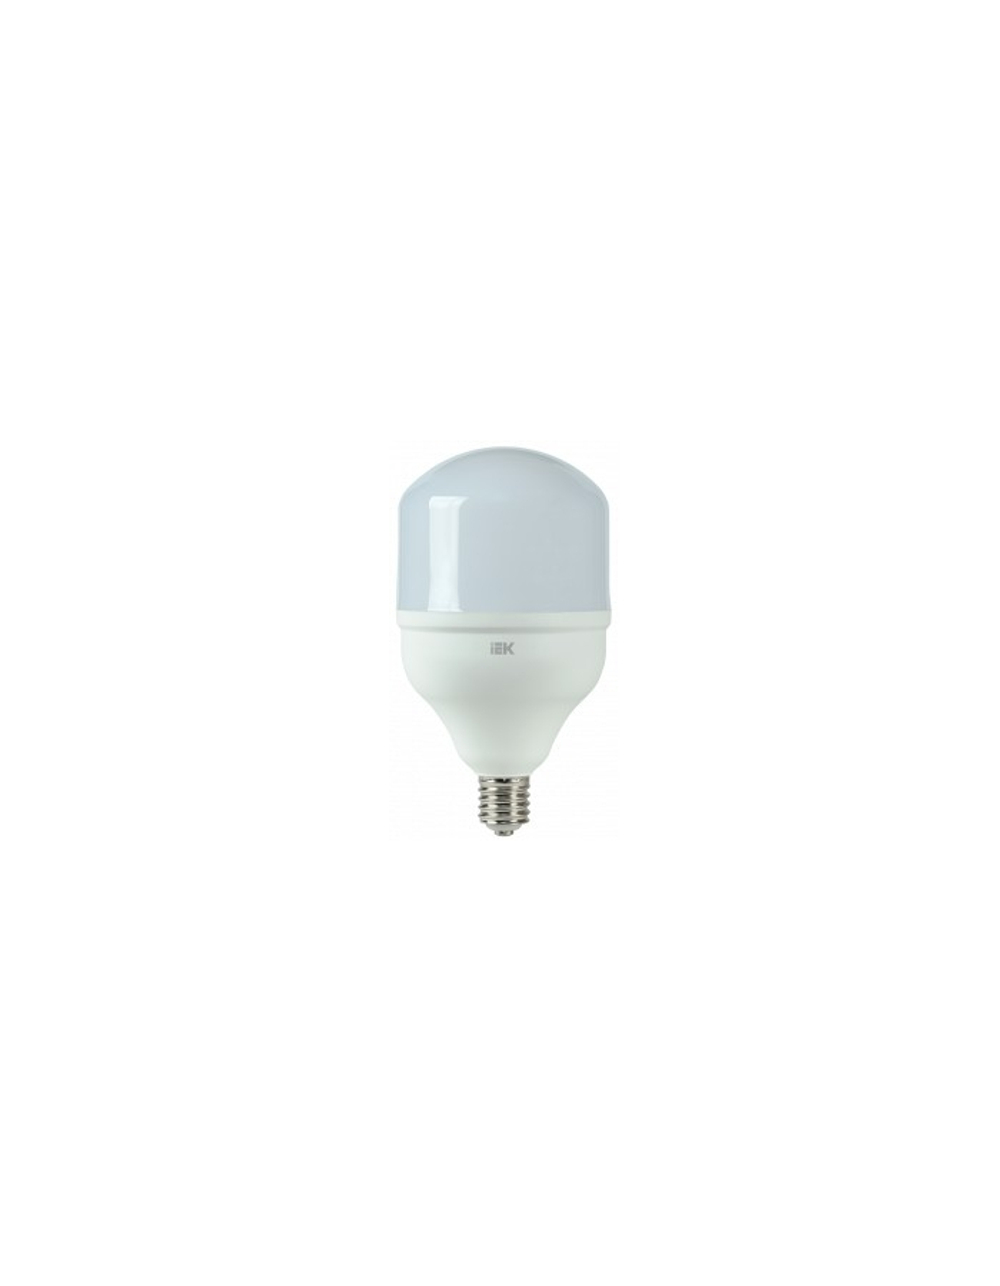 IEK LLE-HP-65-230-65-E40 Лампа светодиодная HP 65Вт 230В 6500К E40